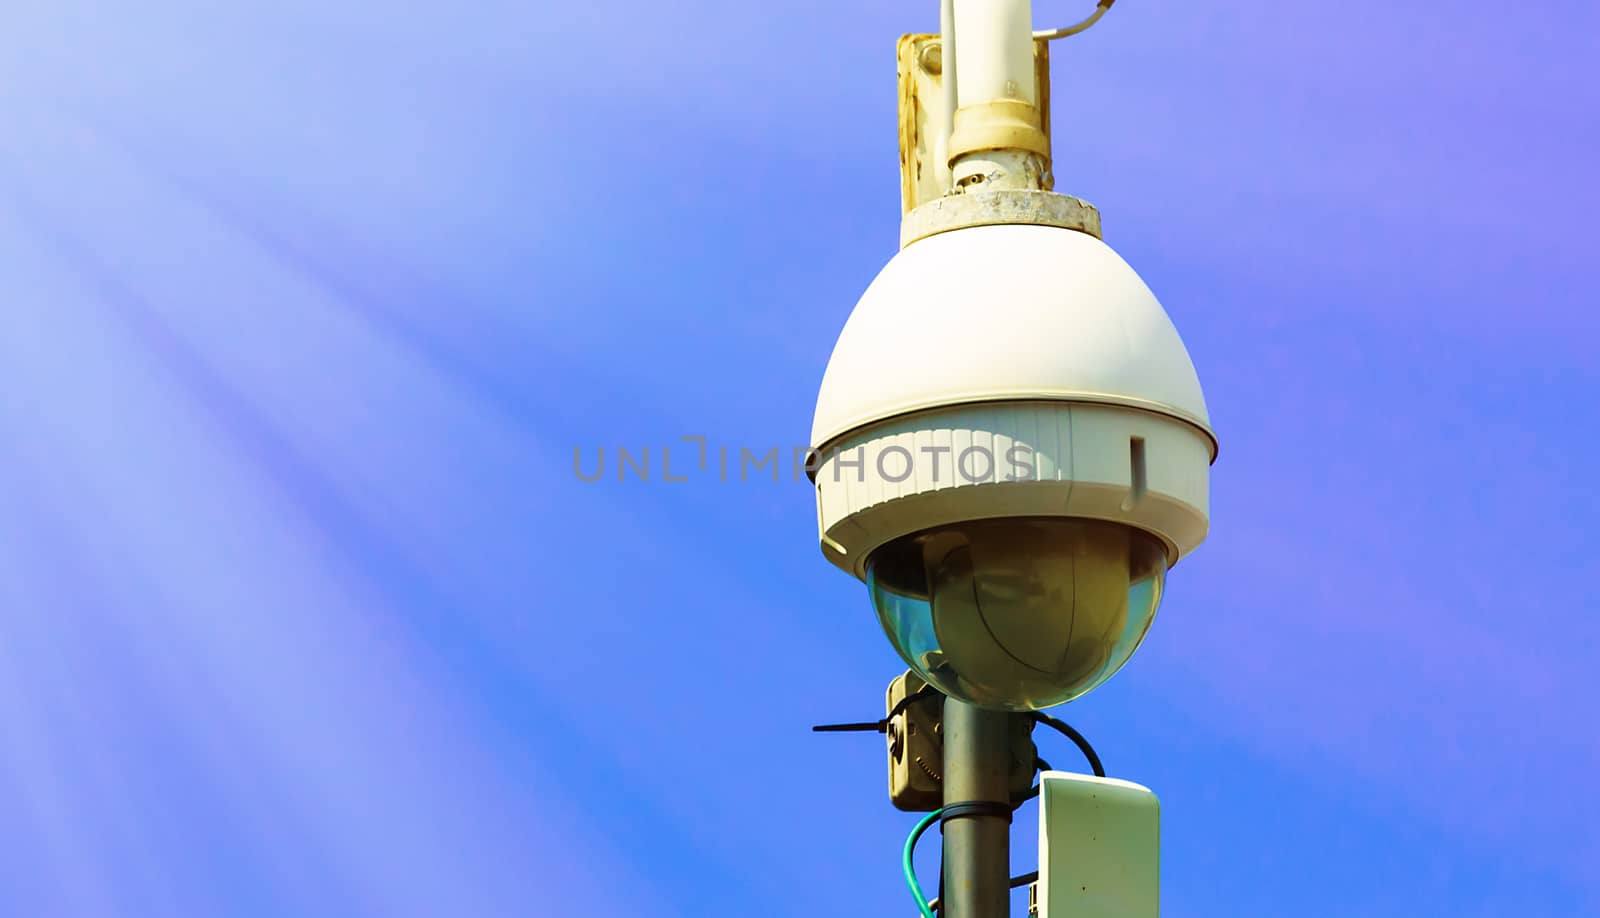 Security CCTV camera under blue sky